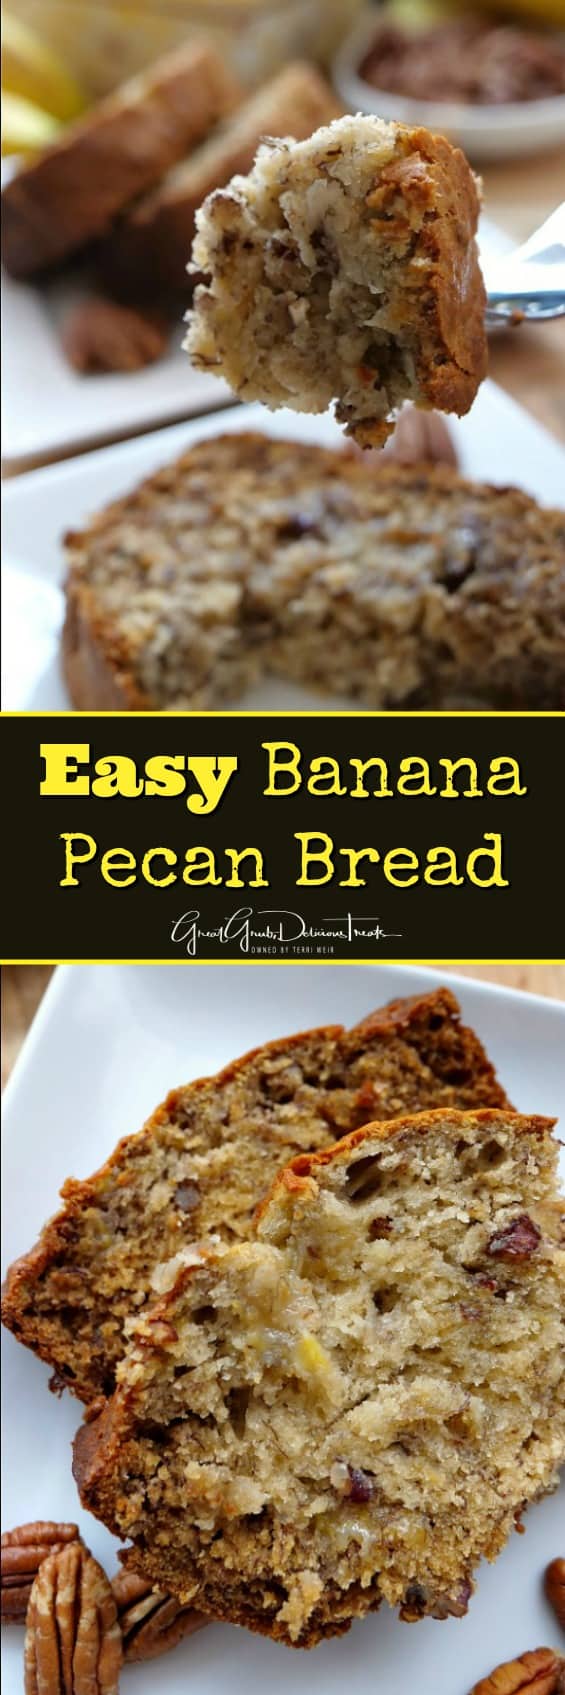 Easy Banana Pecan Bread